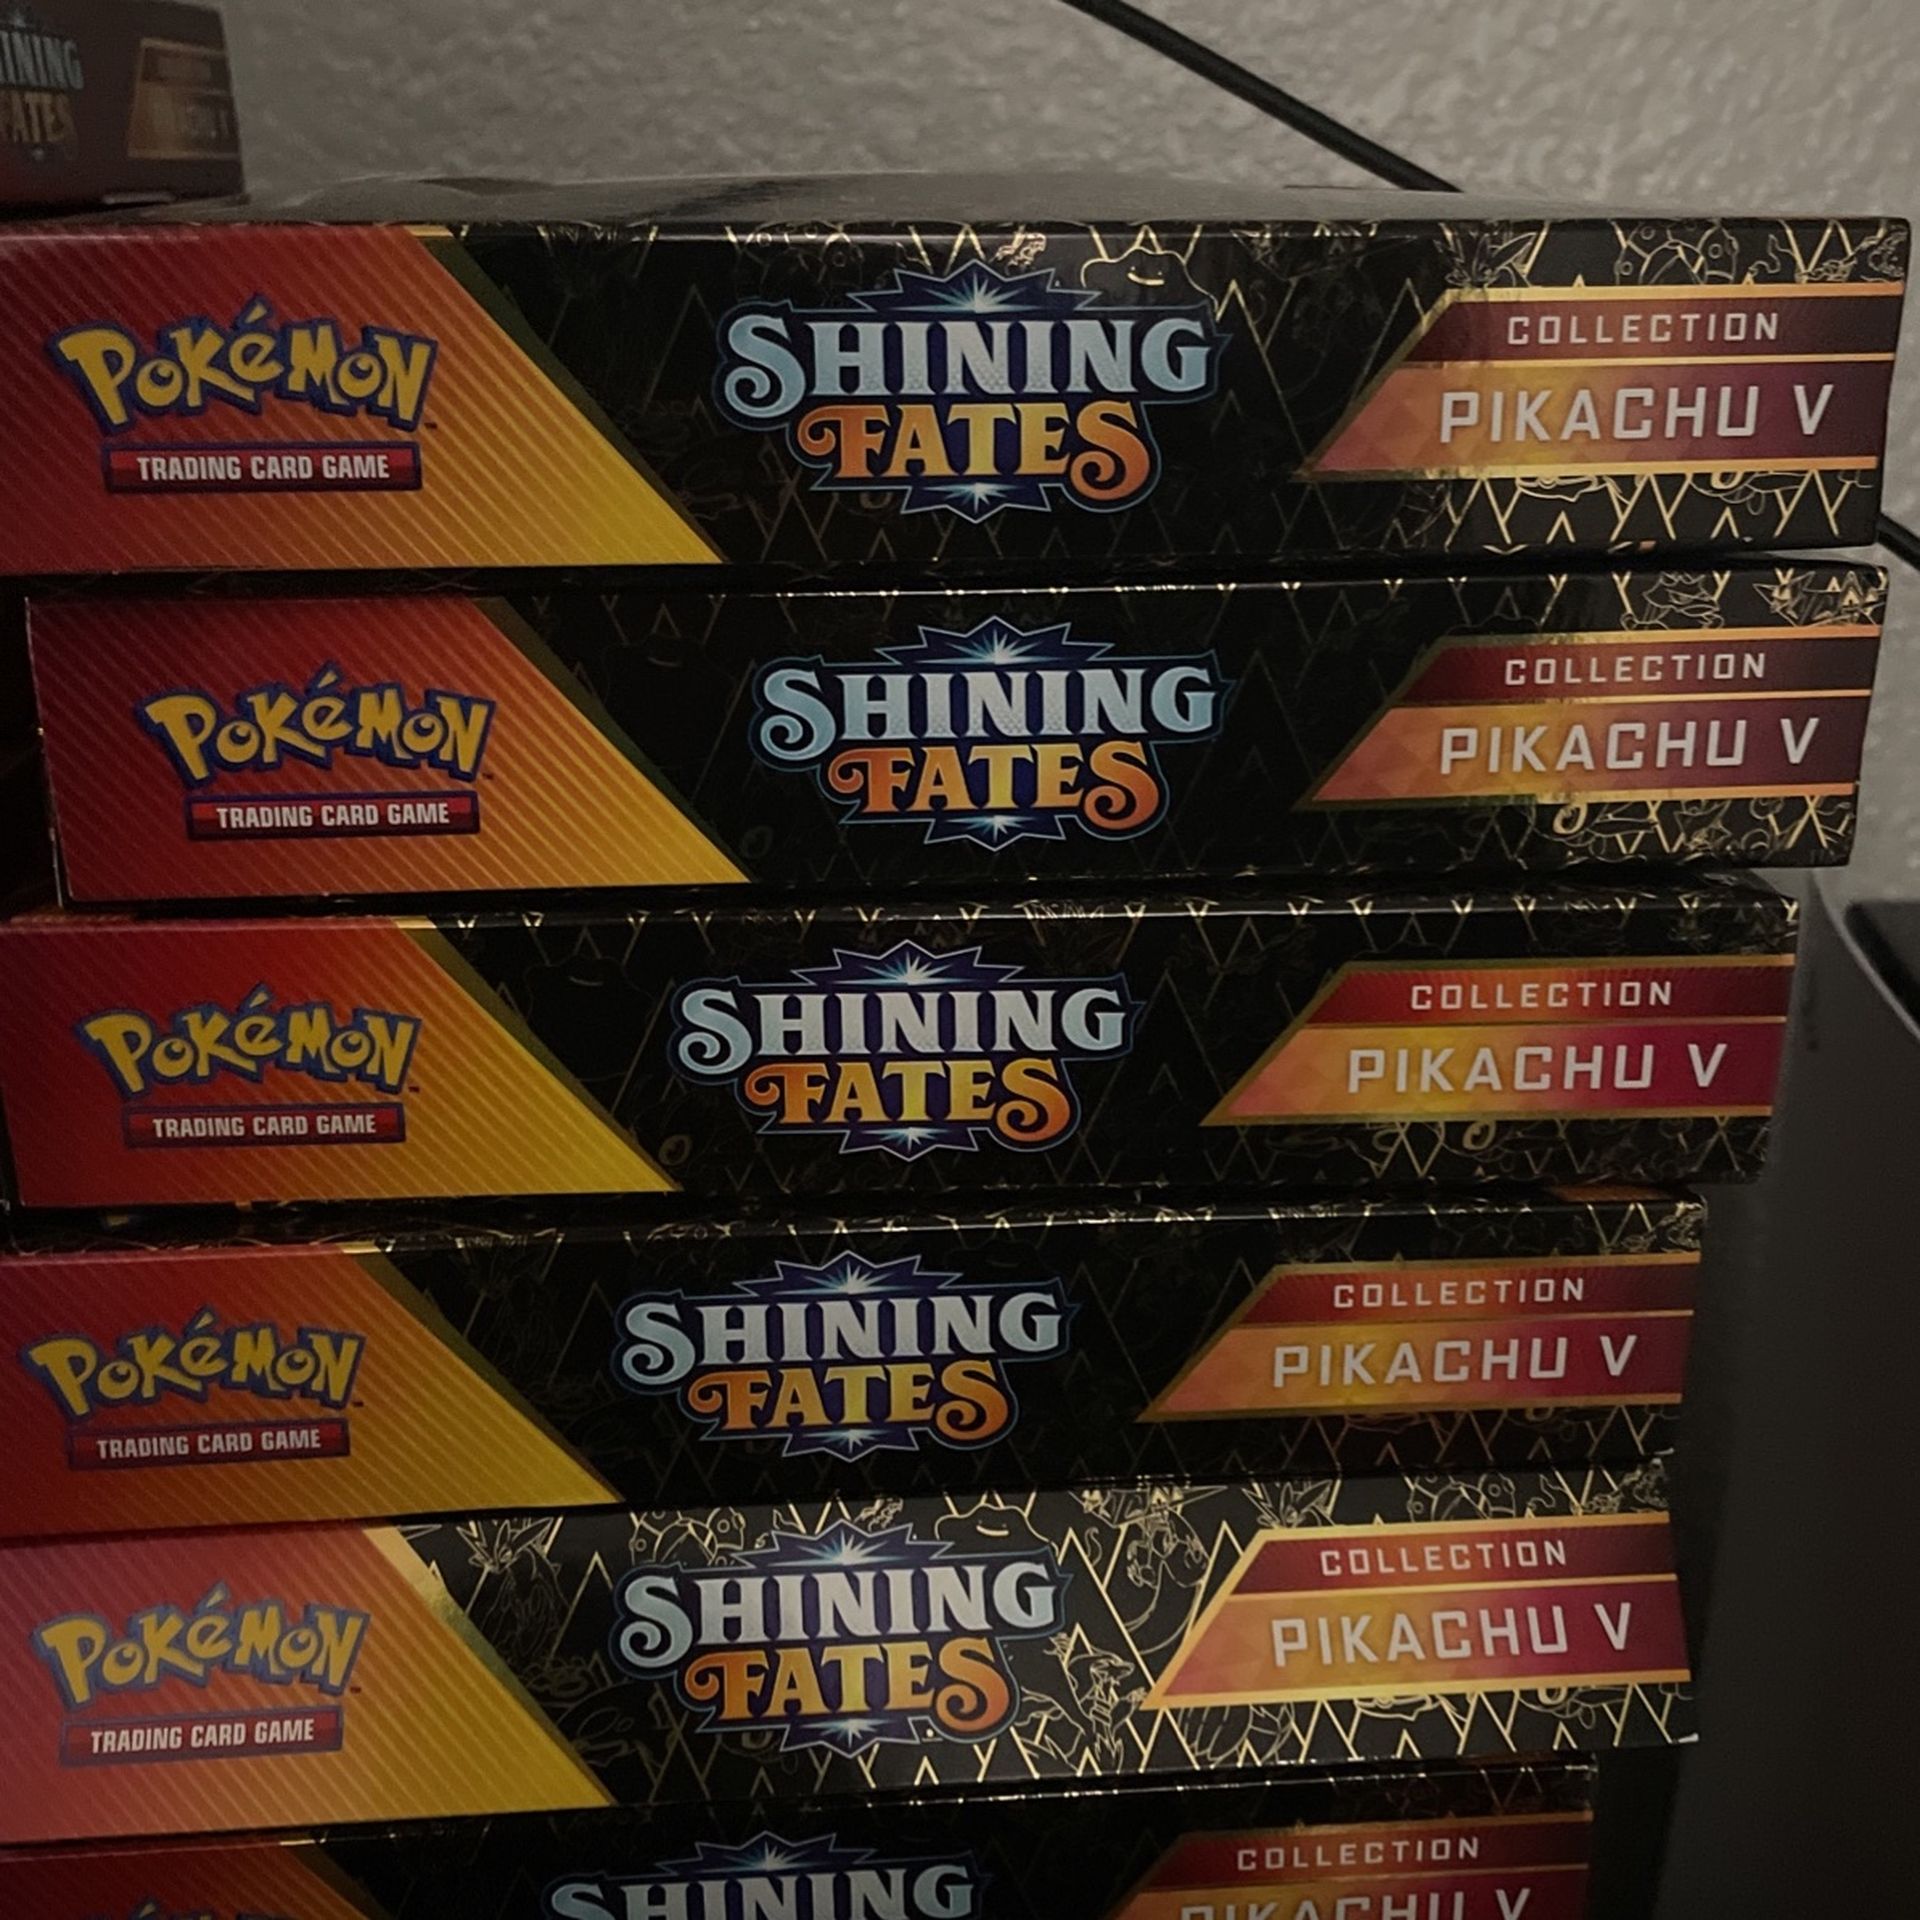 Pokémon Shining Fates Pikachu Collector Box